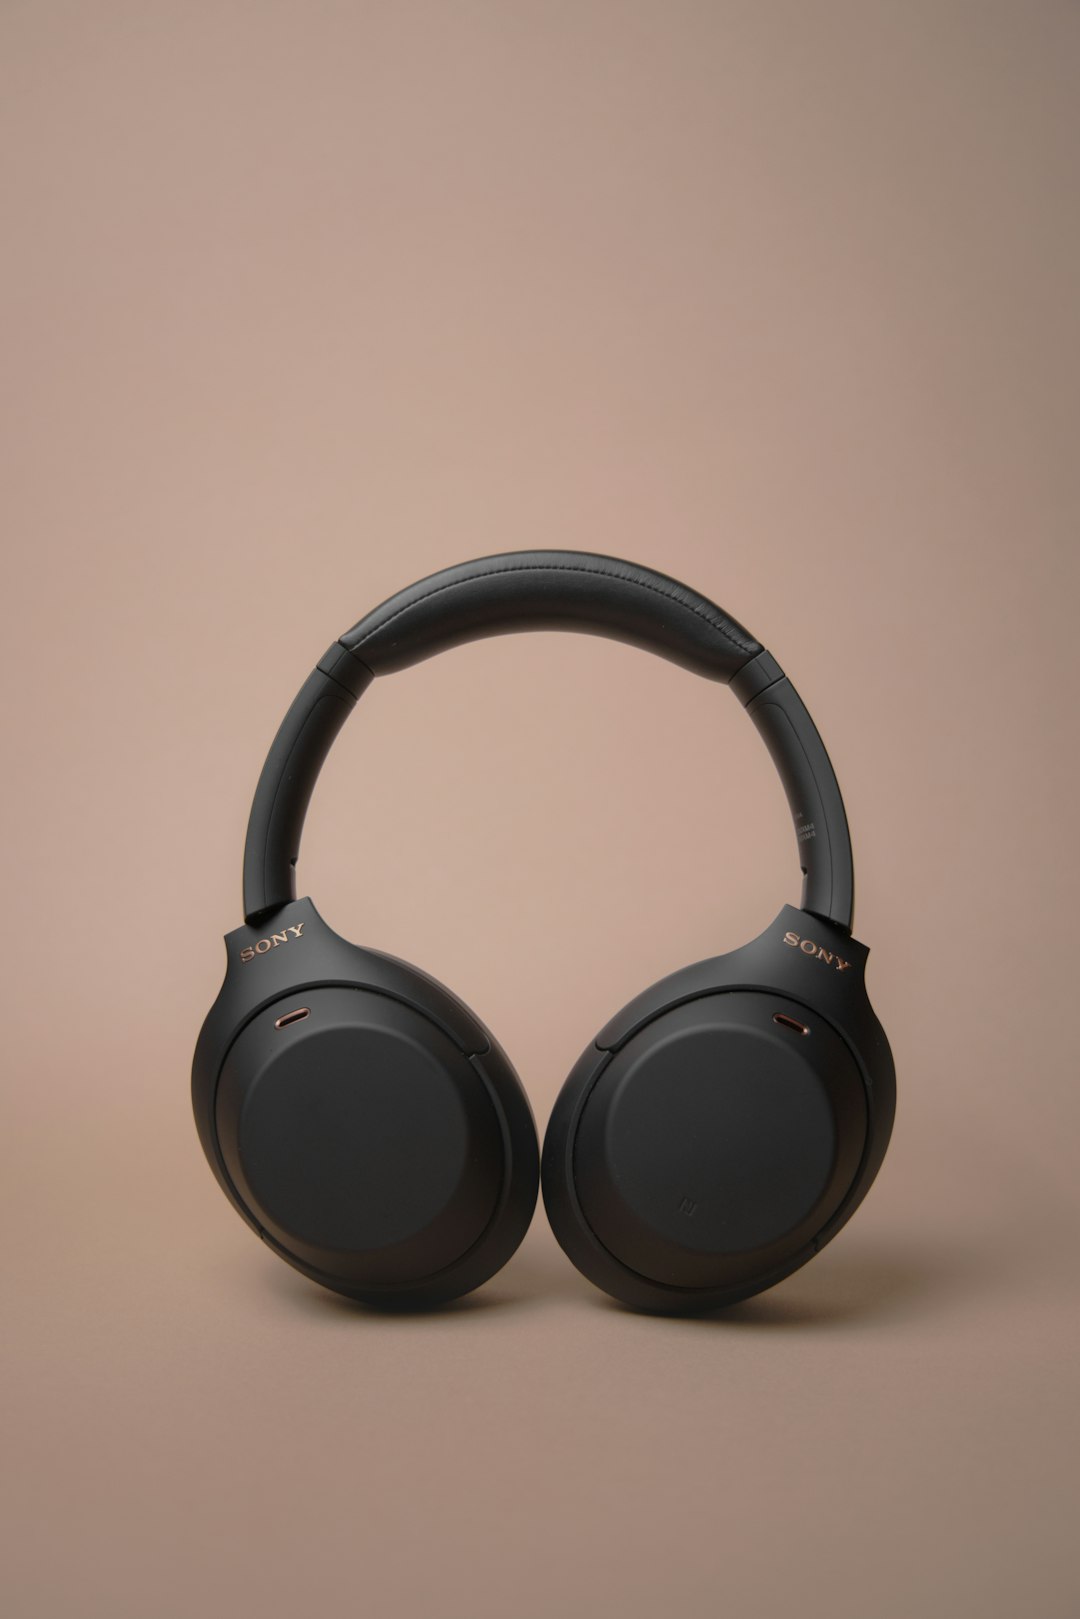 black wireless headphones on white table